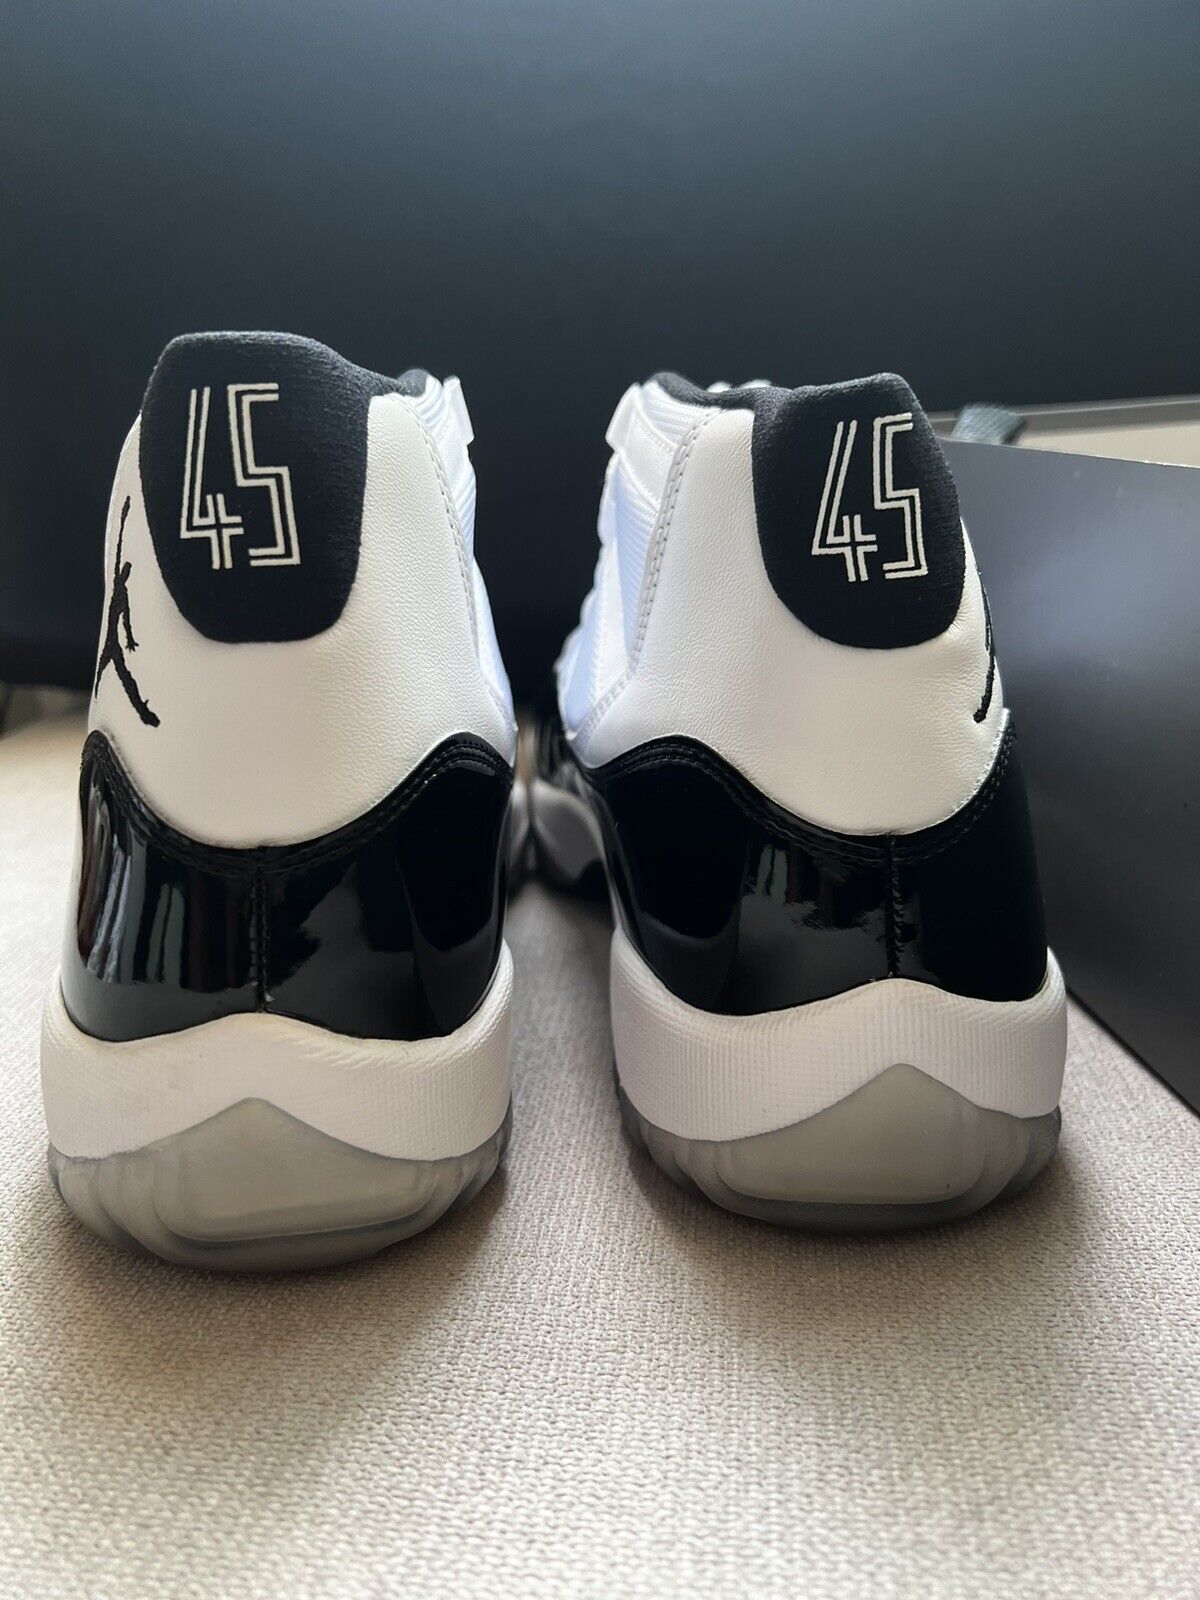 Size 10 - Jordan 11 Retro Concord 2018